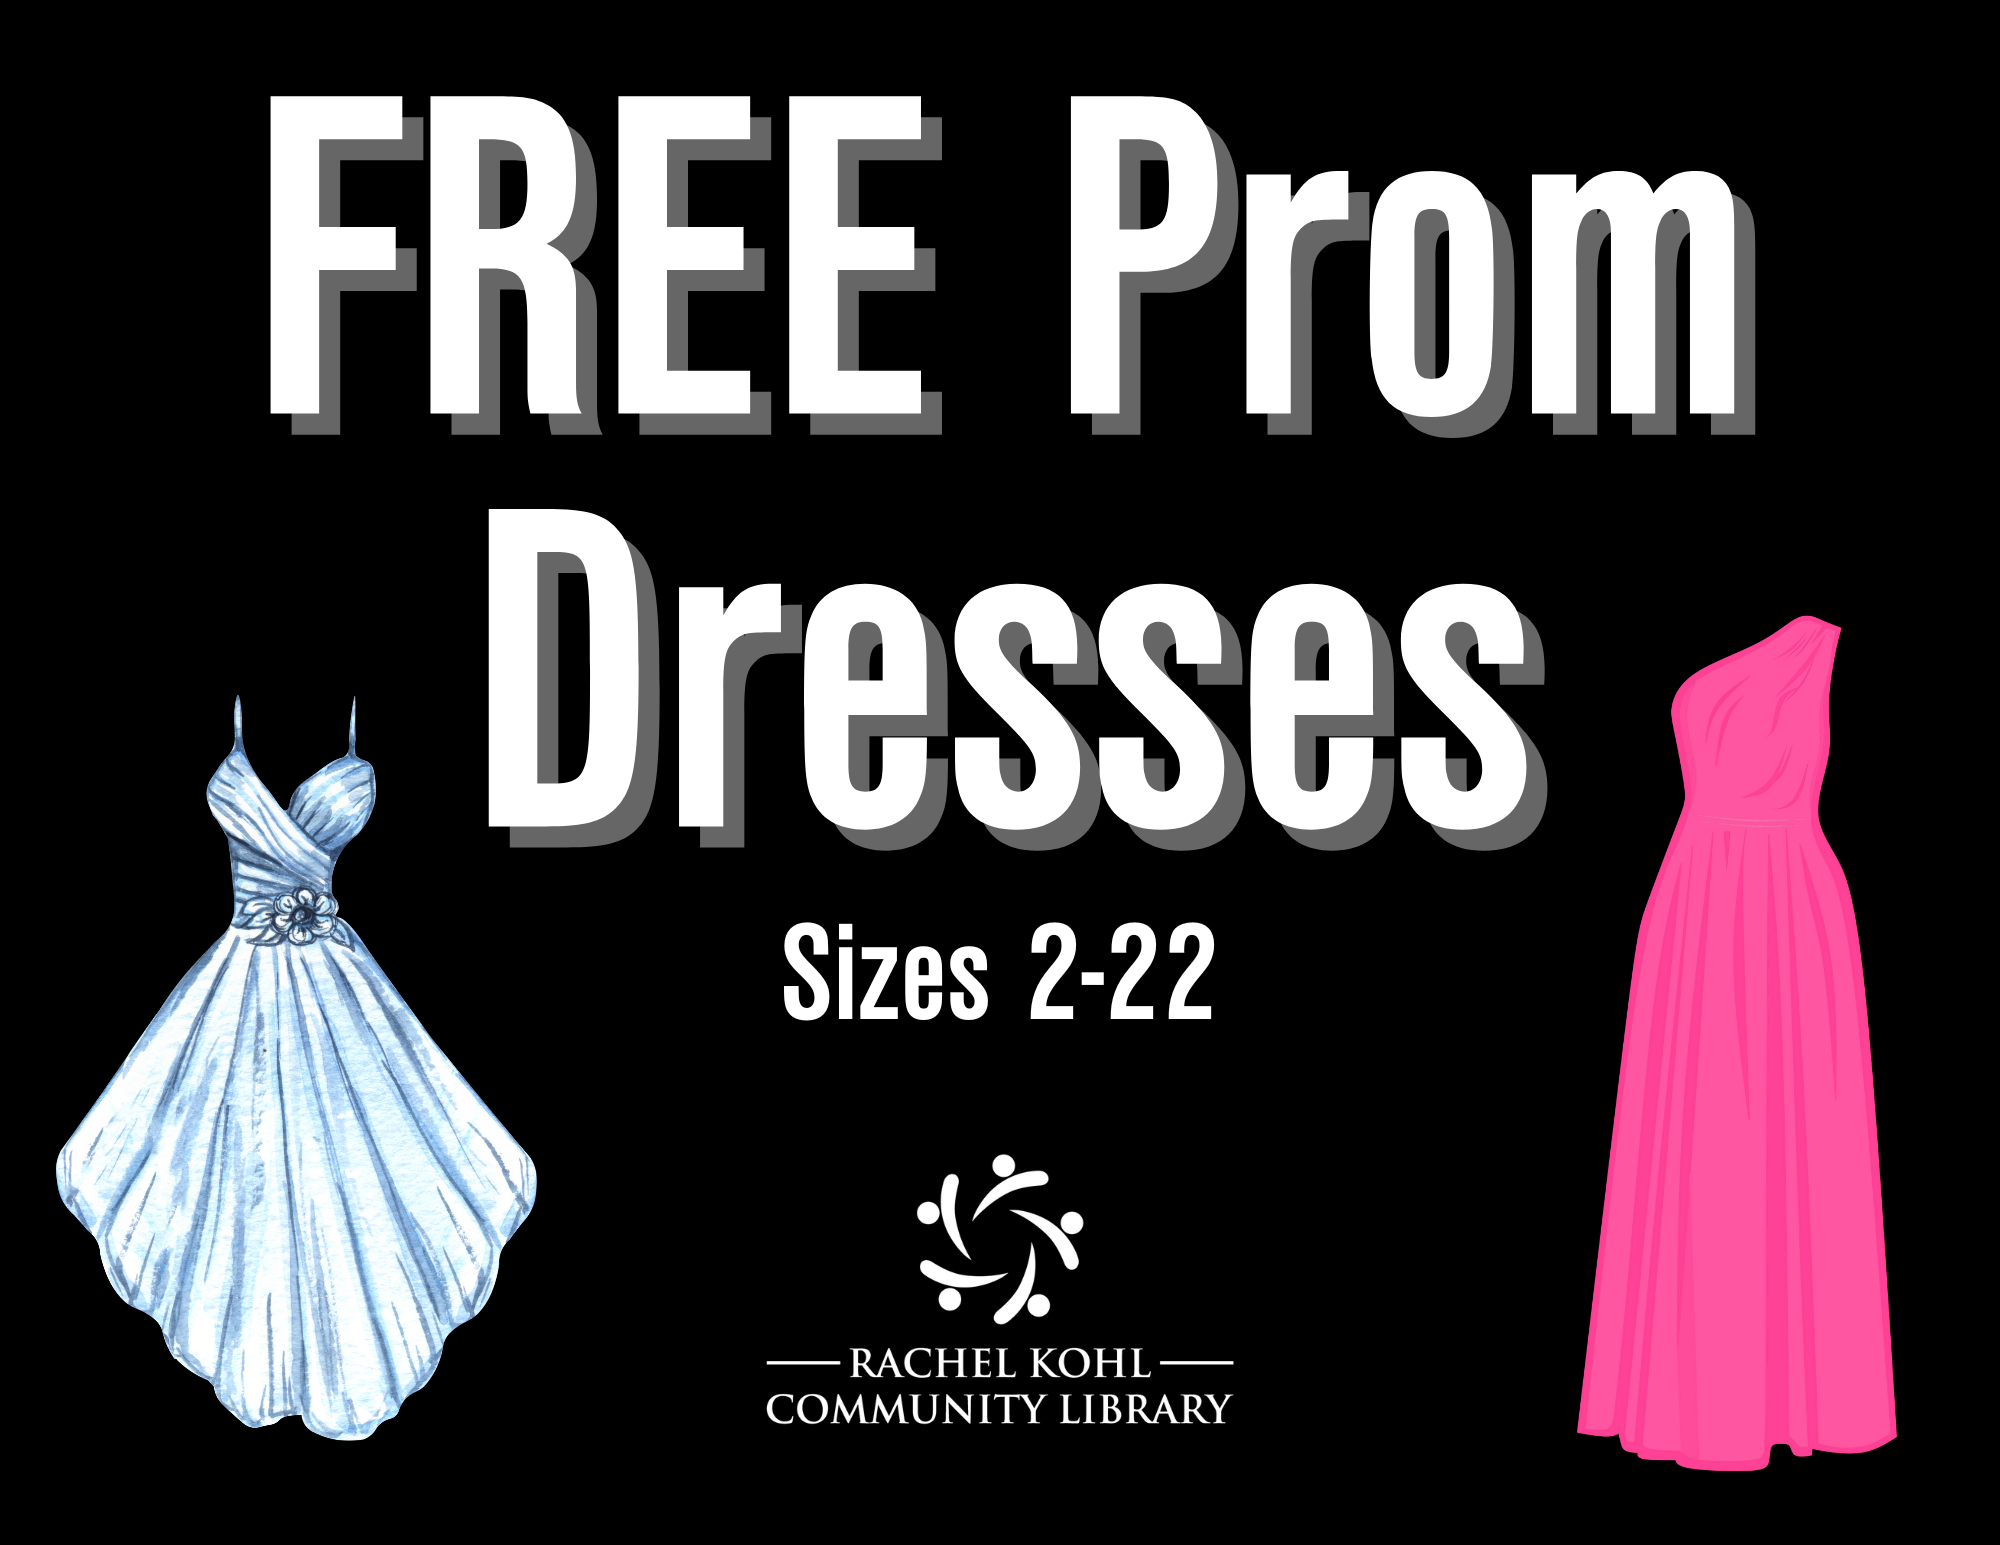 FREE Prom Dresses Sizes 2 -22, Rachel Kohl Community Library